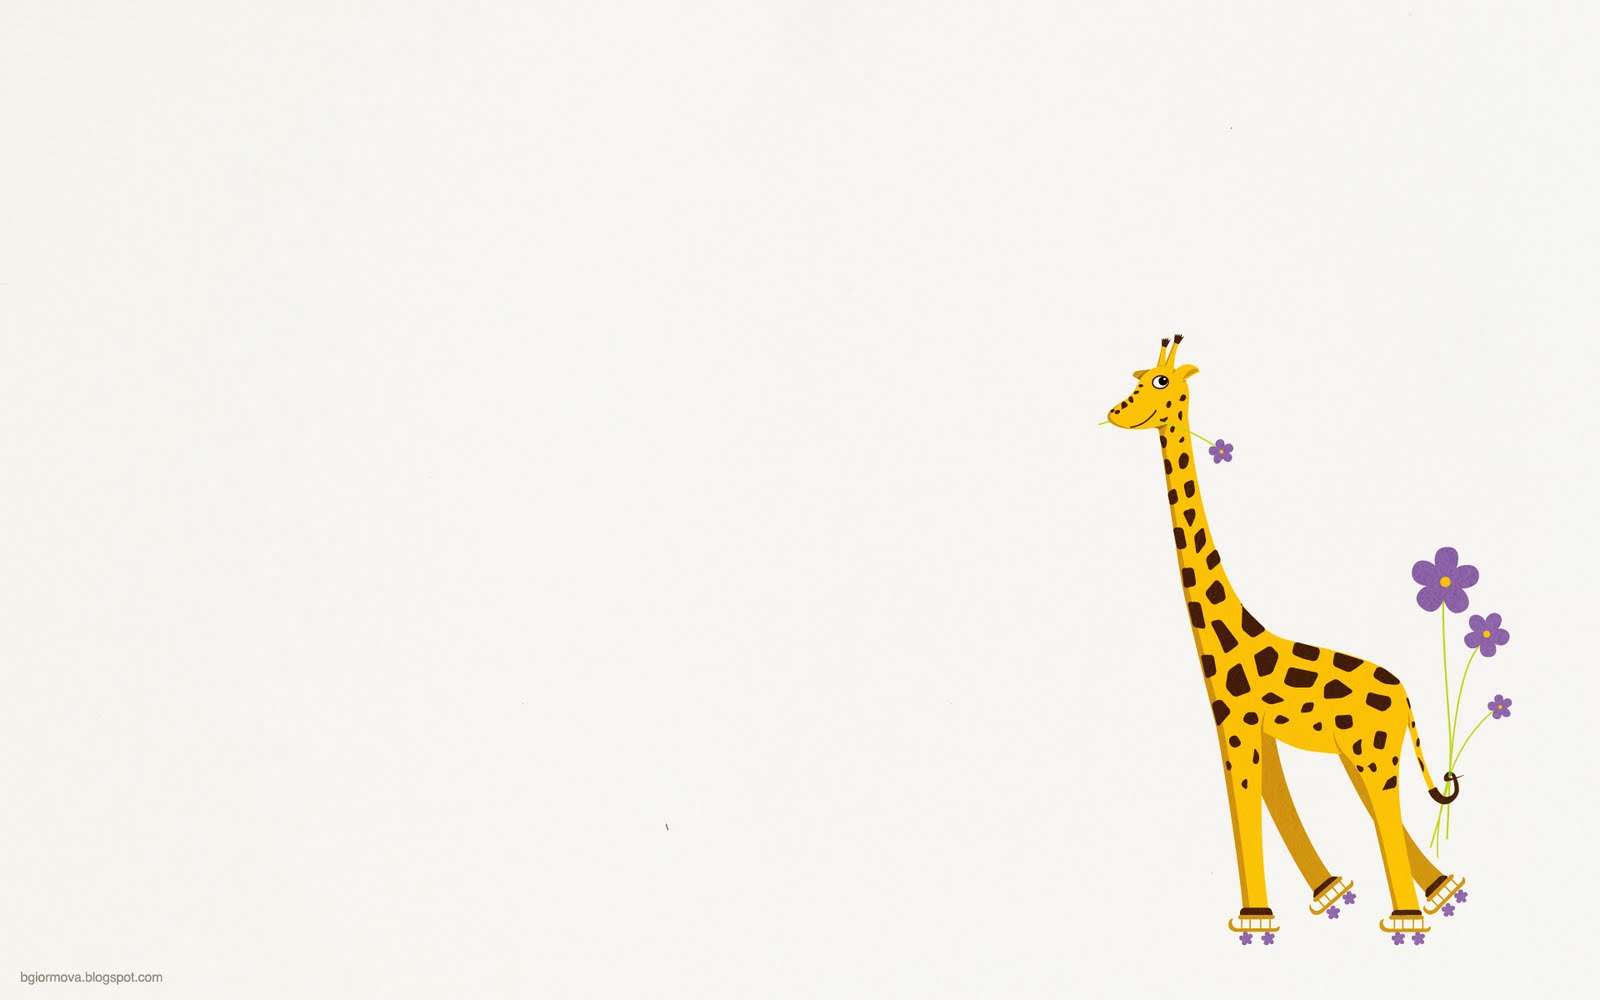 Desktop Wallpaper And An iPhone With The Giraffe